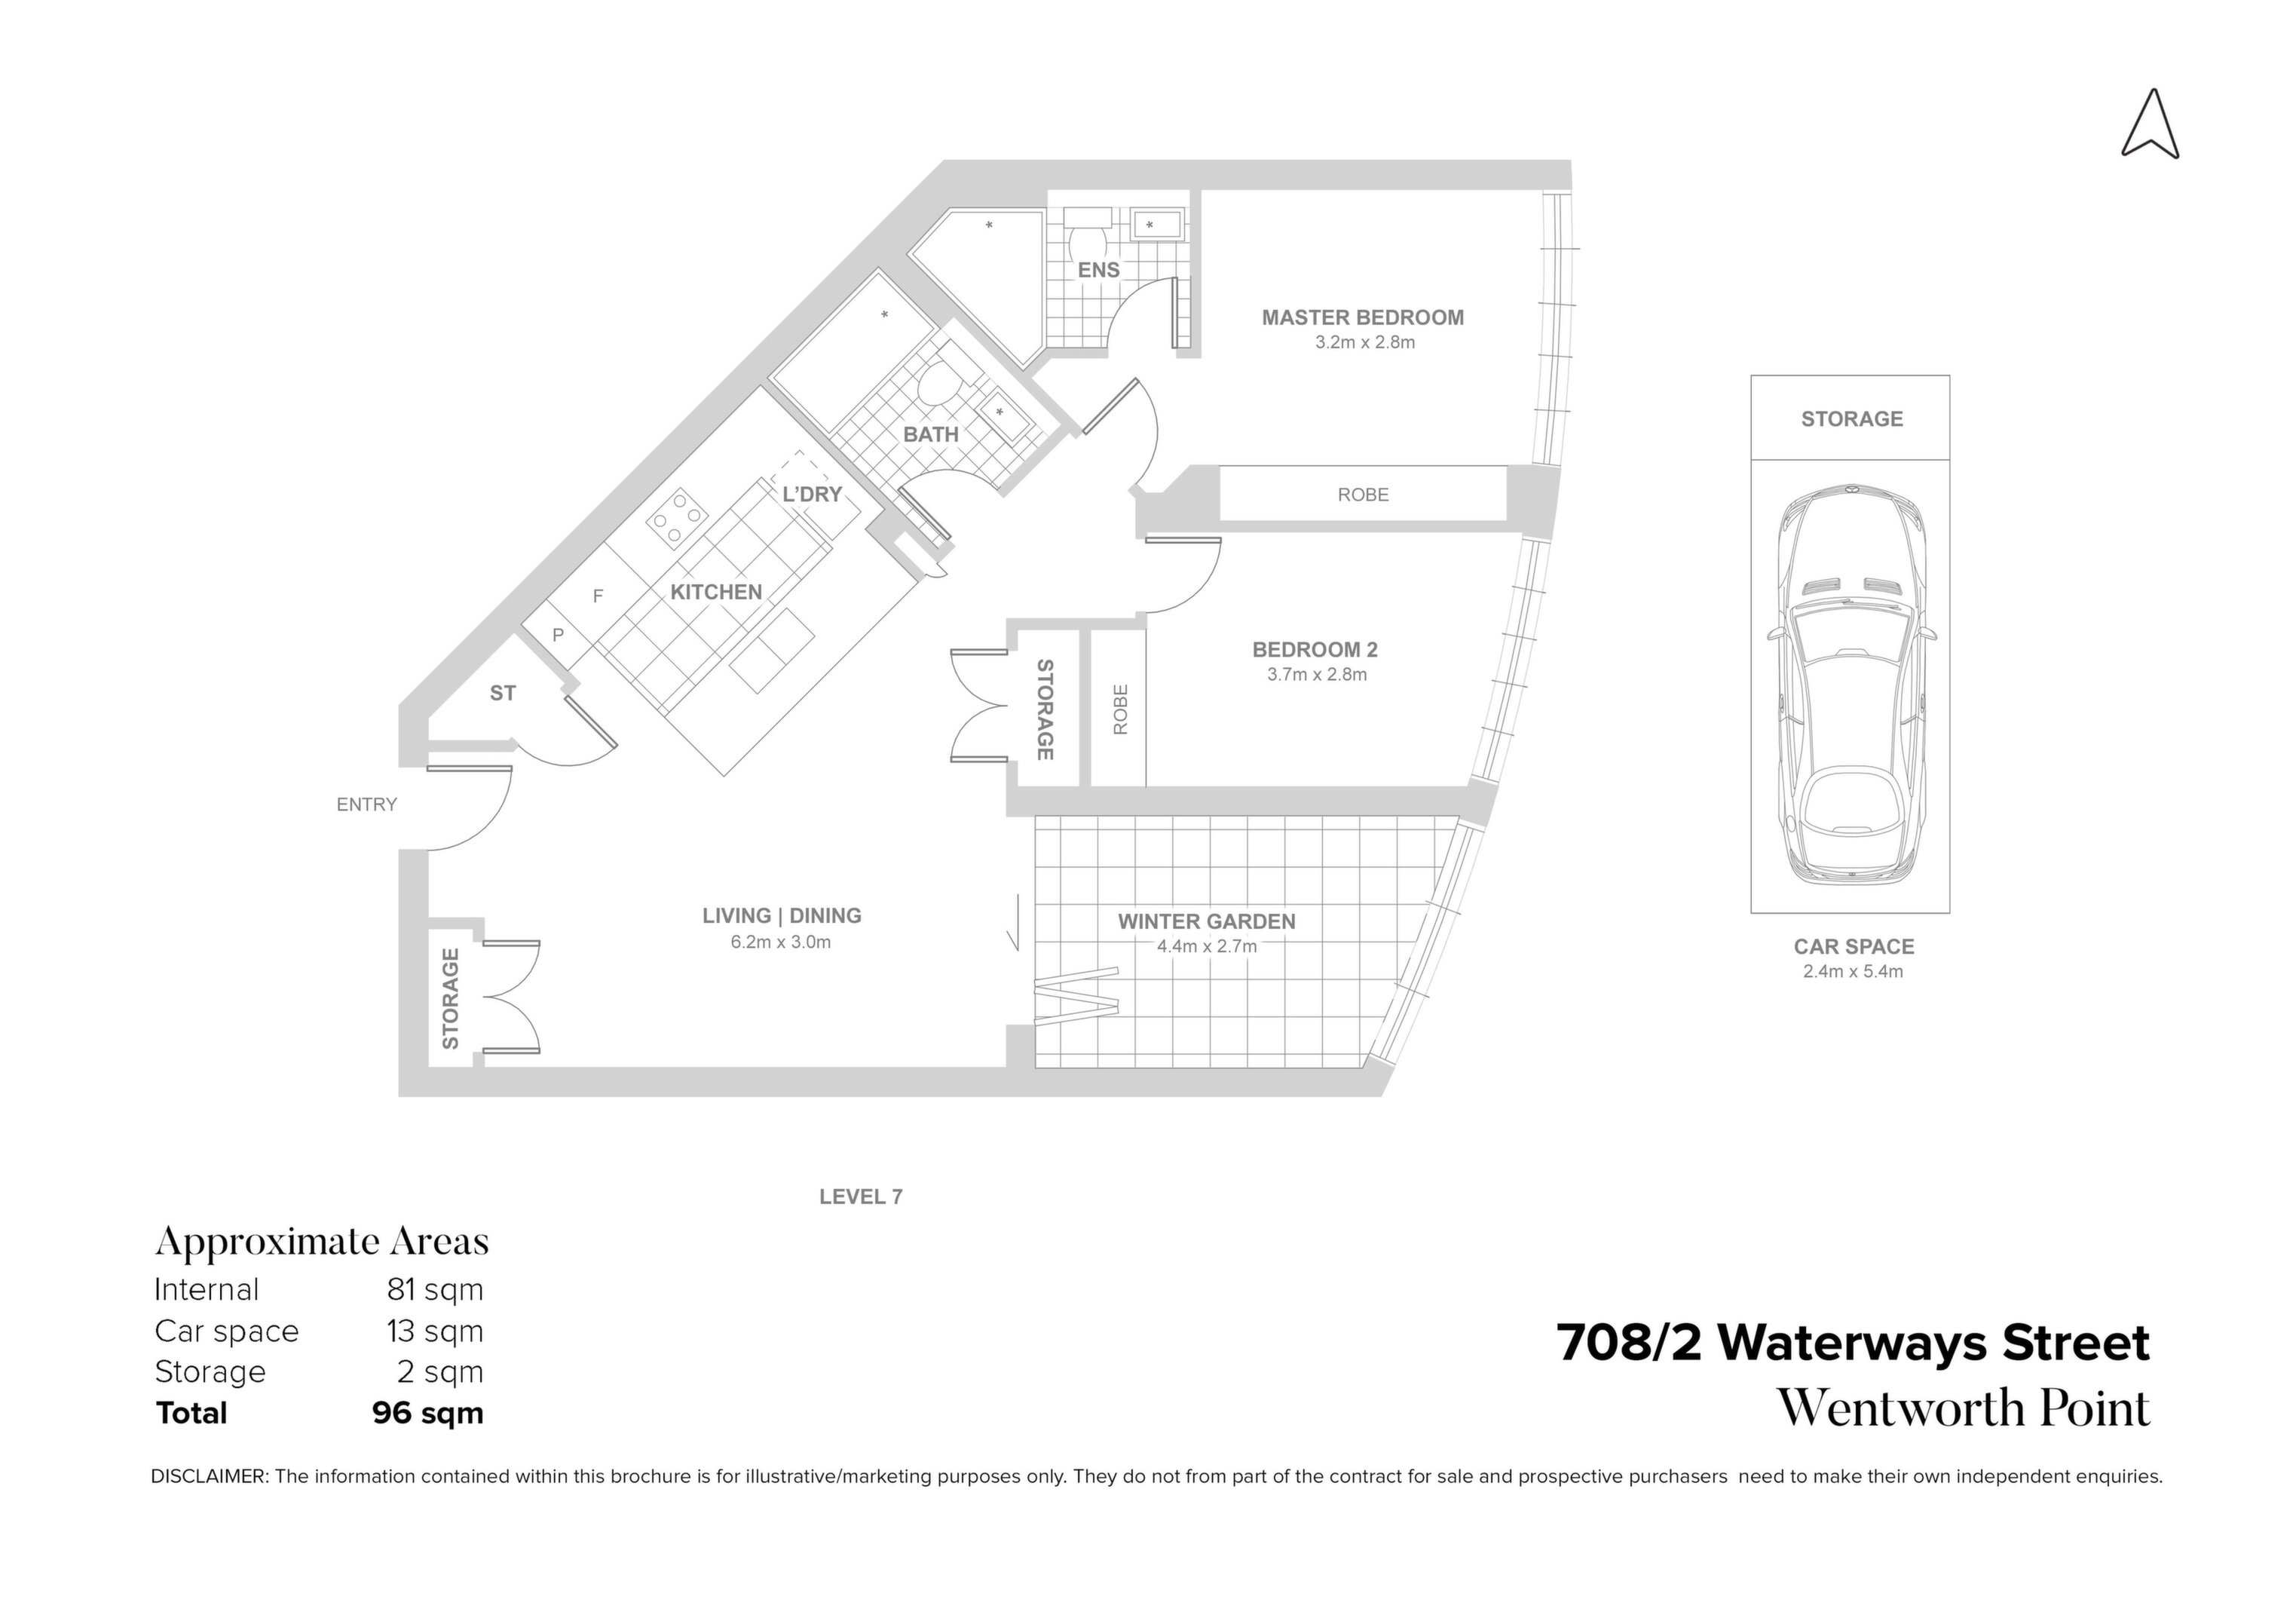 708/2 Waterways Street, Wentworth Point Sold by Chidiac Realty - floorplan